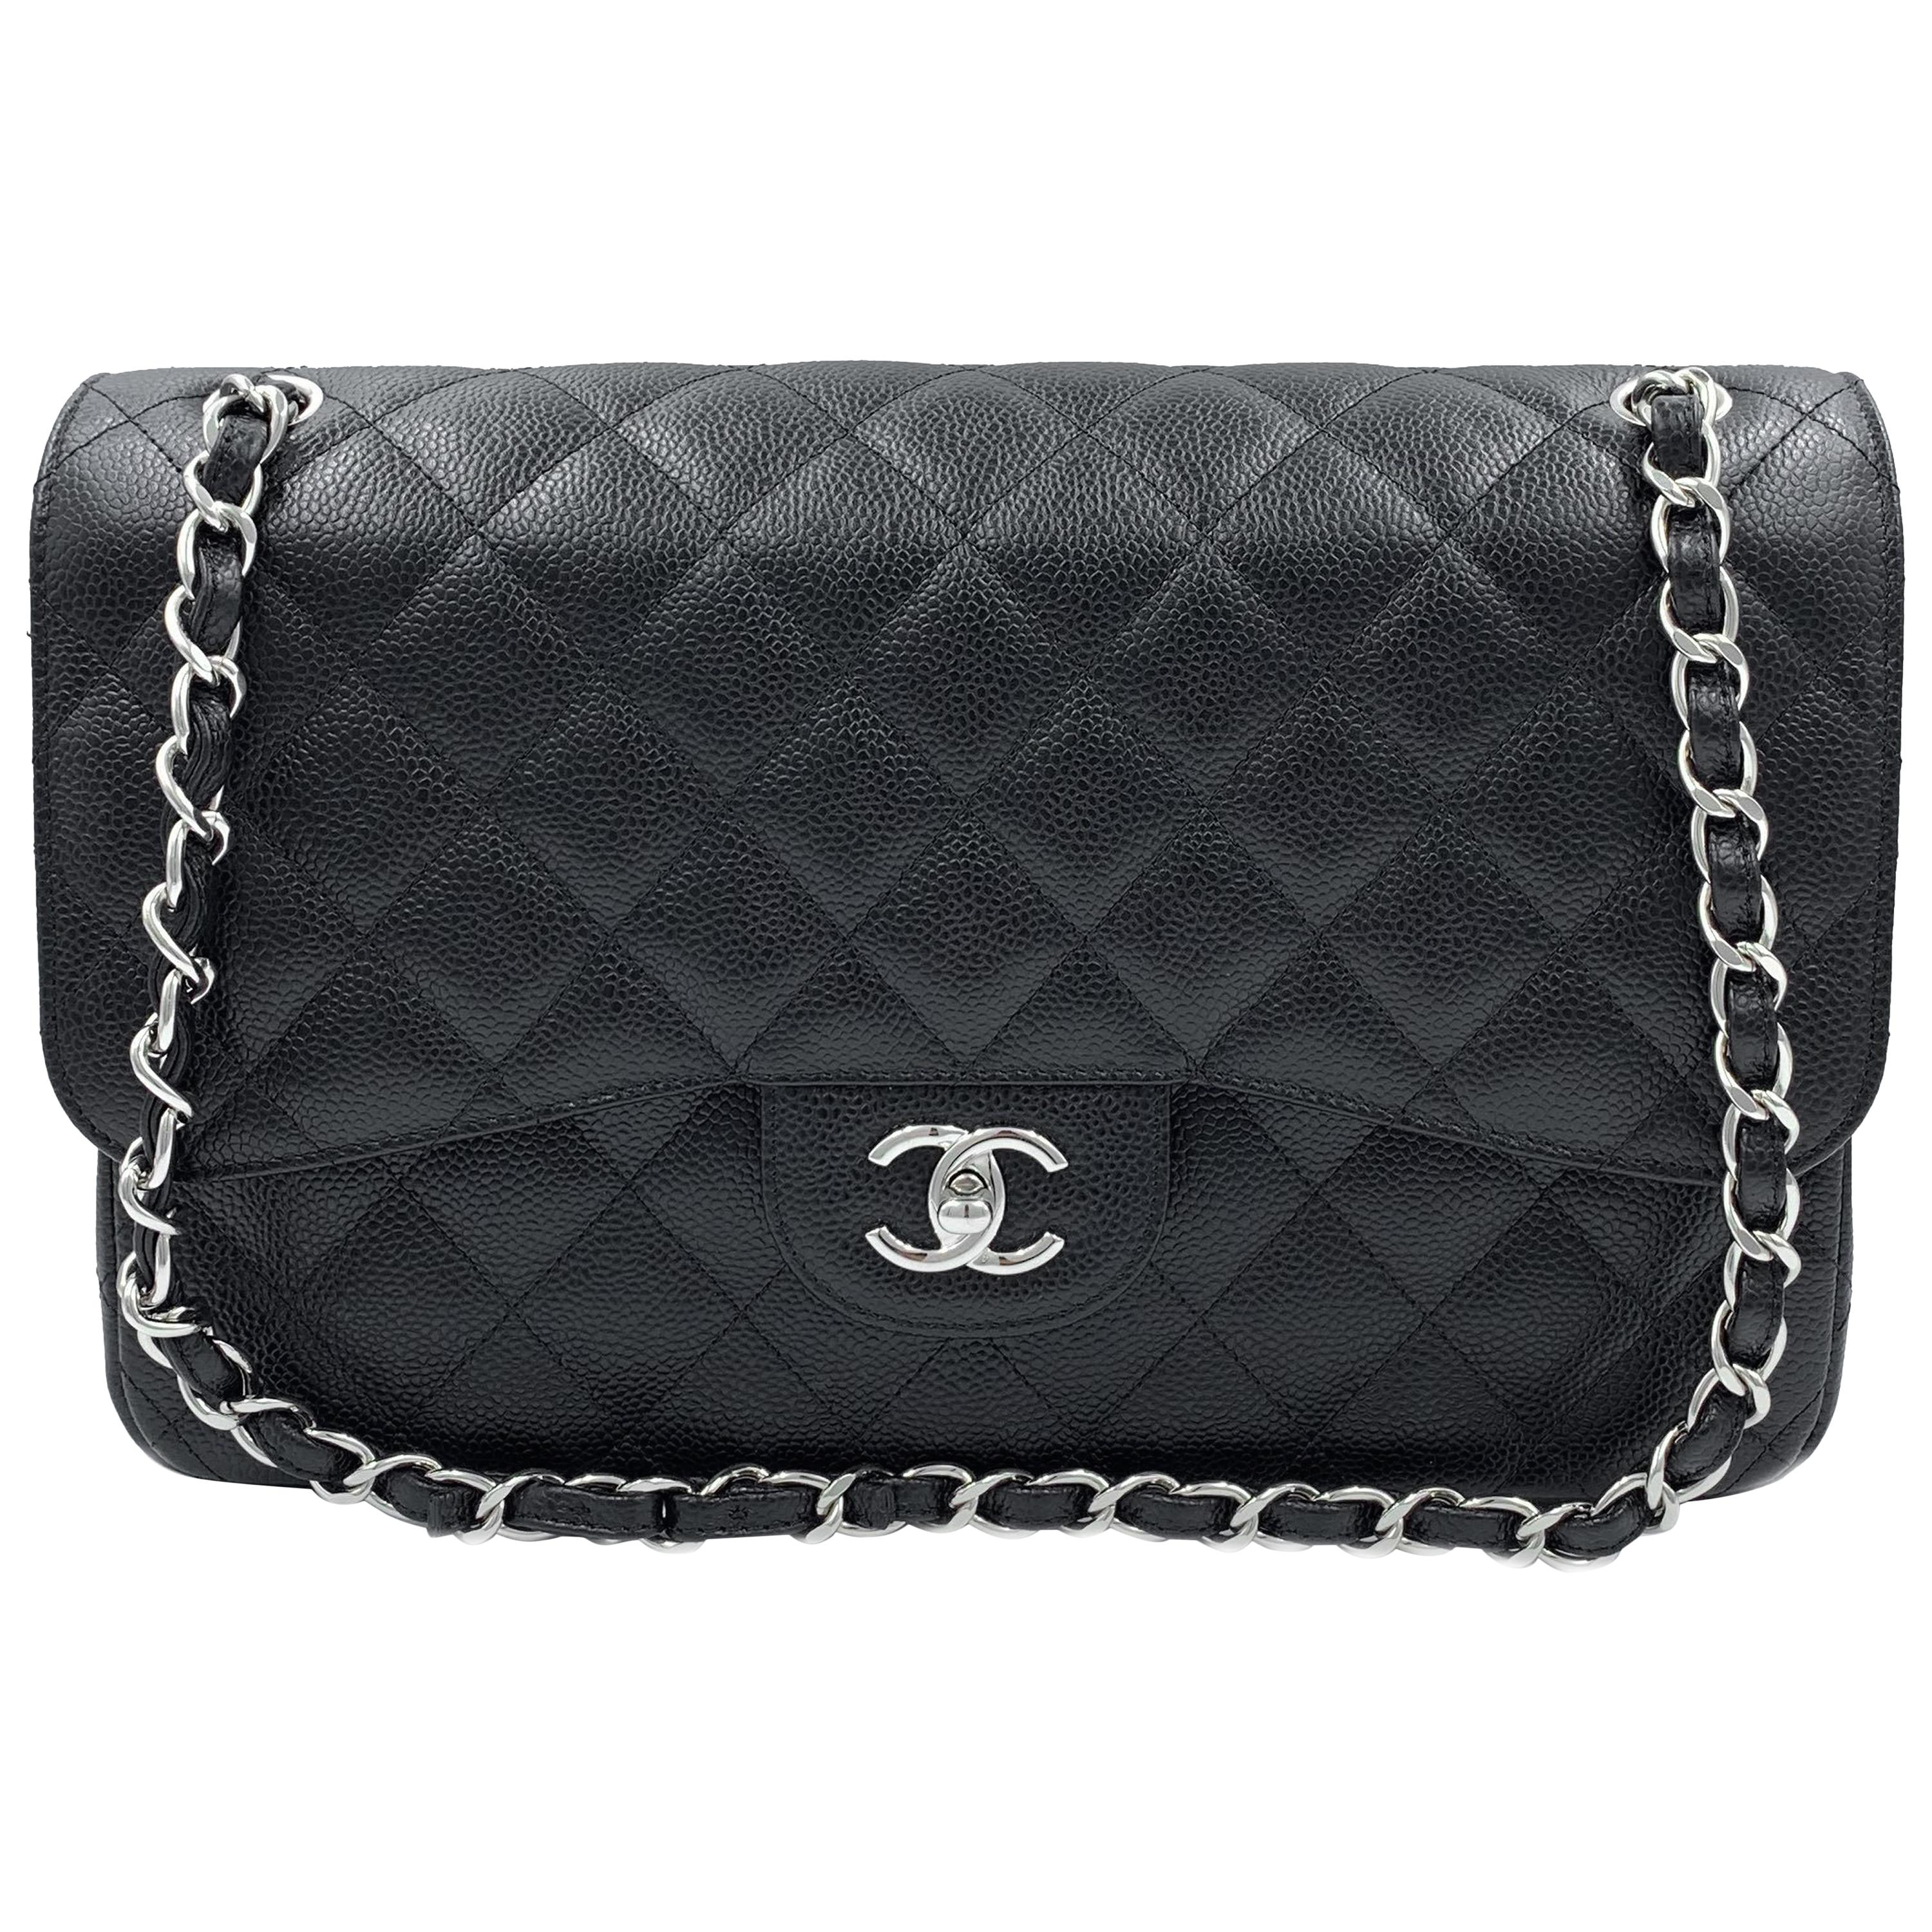 Chanel Classic Jumbo Double Flap Caviar Silver Hardware Leather Black Bag 